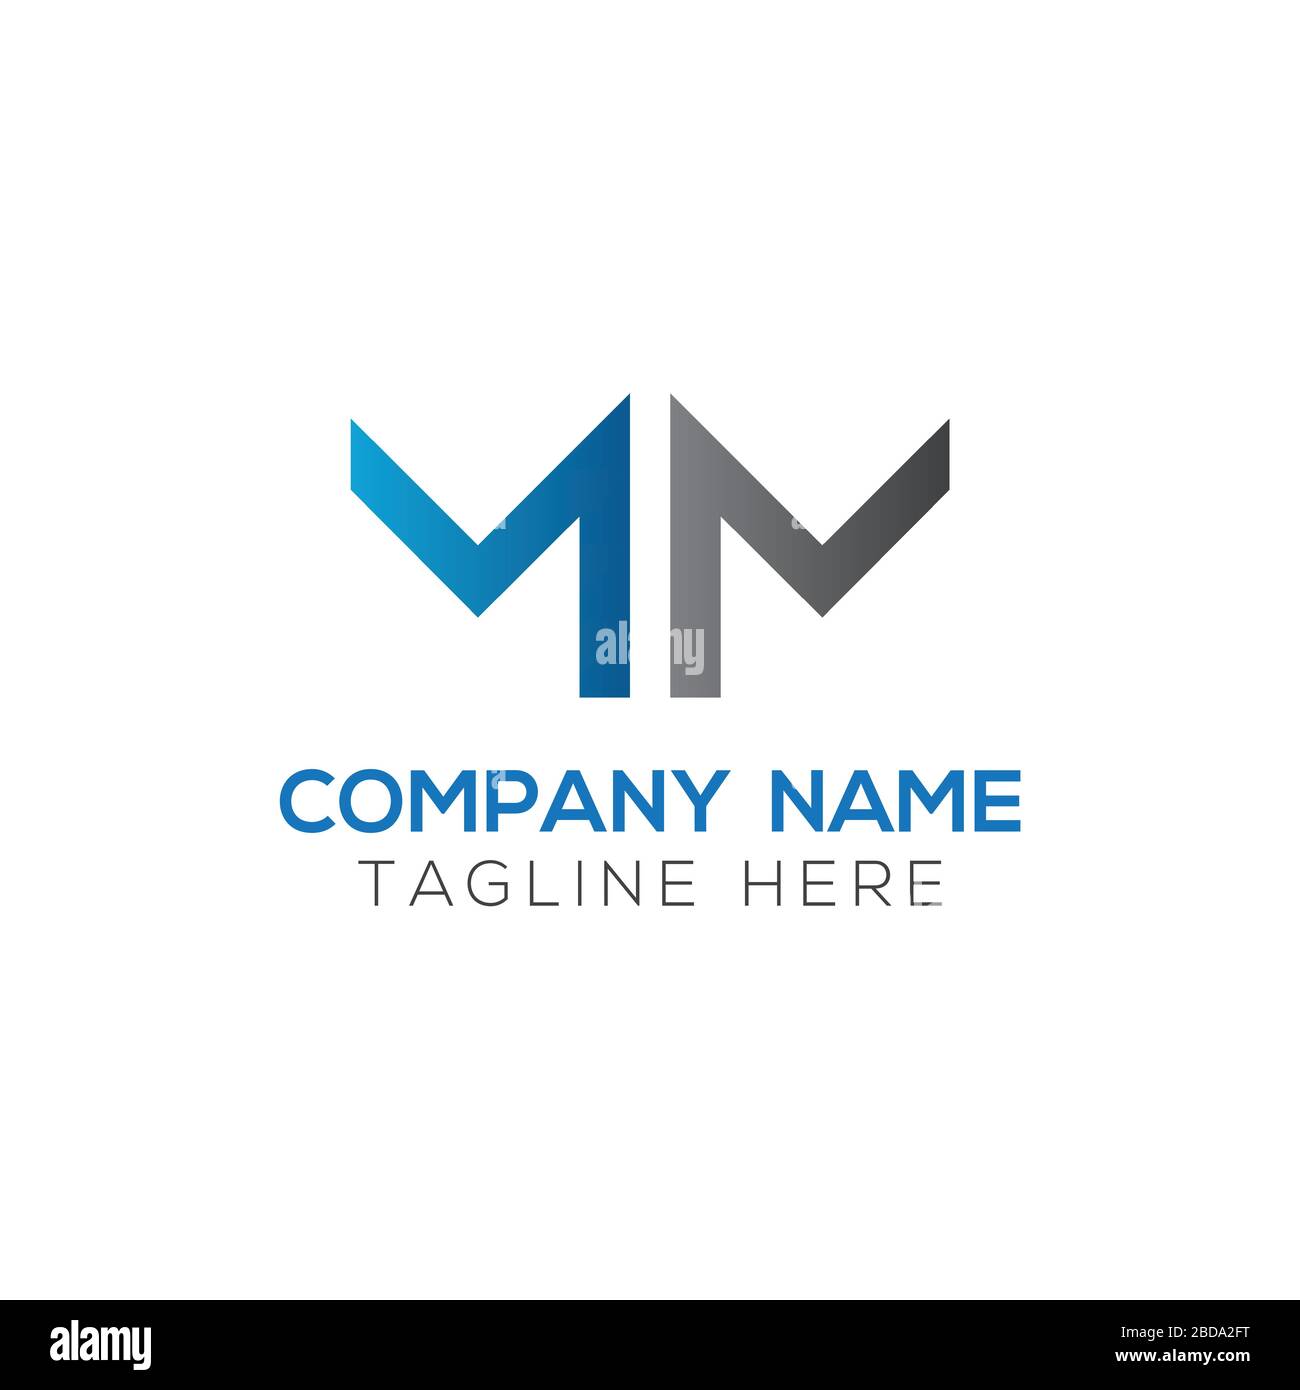 Initials Logo Design, MM